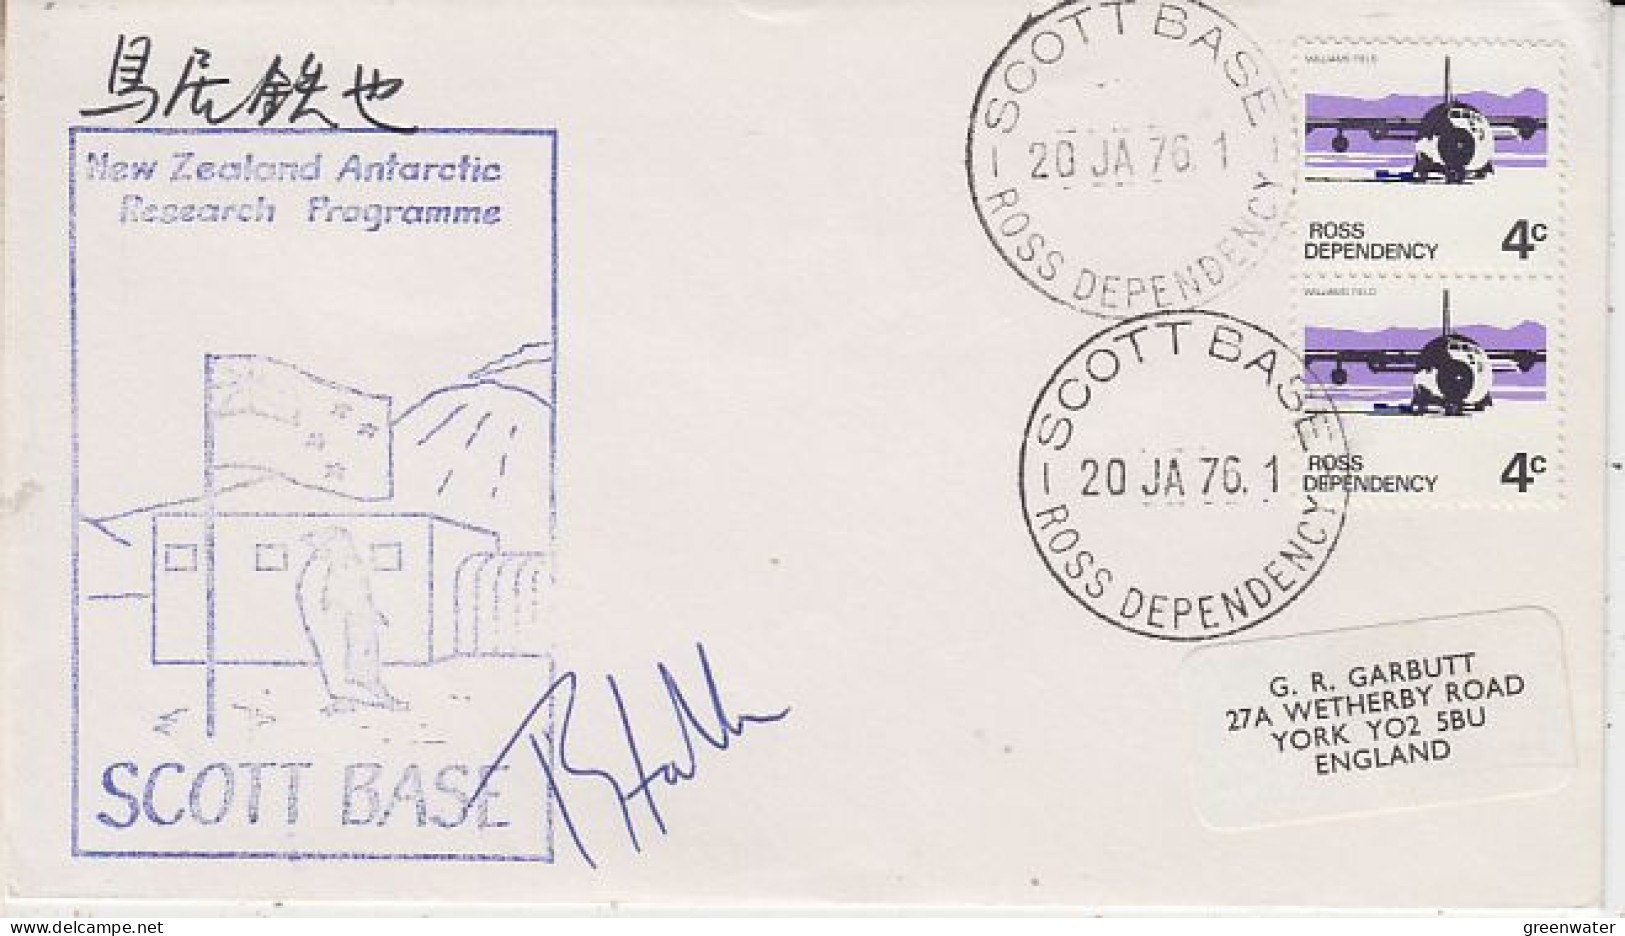 Ross Dependency NZARP Scott Base Signature Japanese Scientist + Signature Ca Scott Base 20 JA 1976  (RO199) - Lettres & Documents